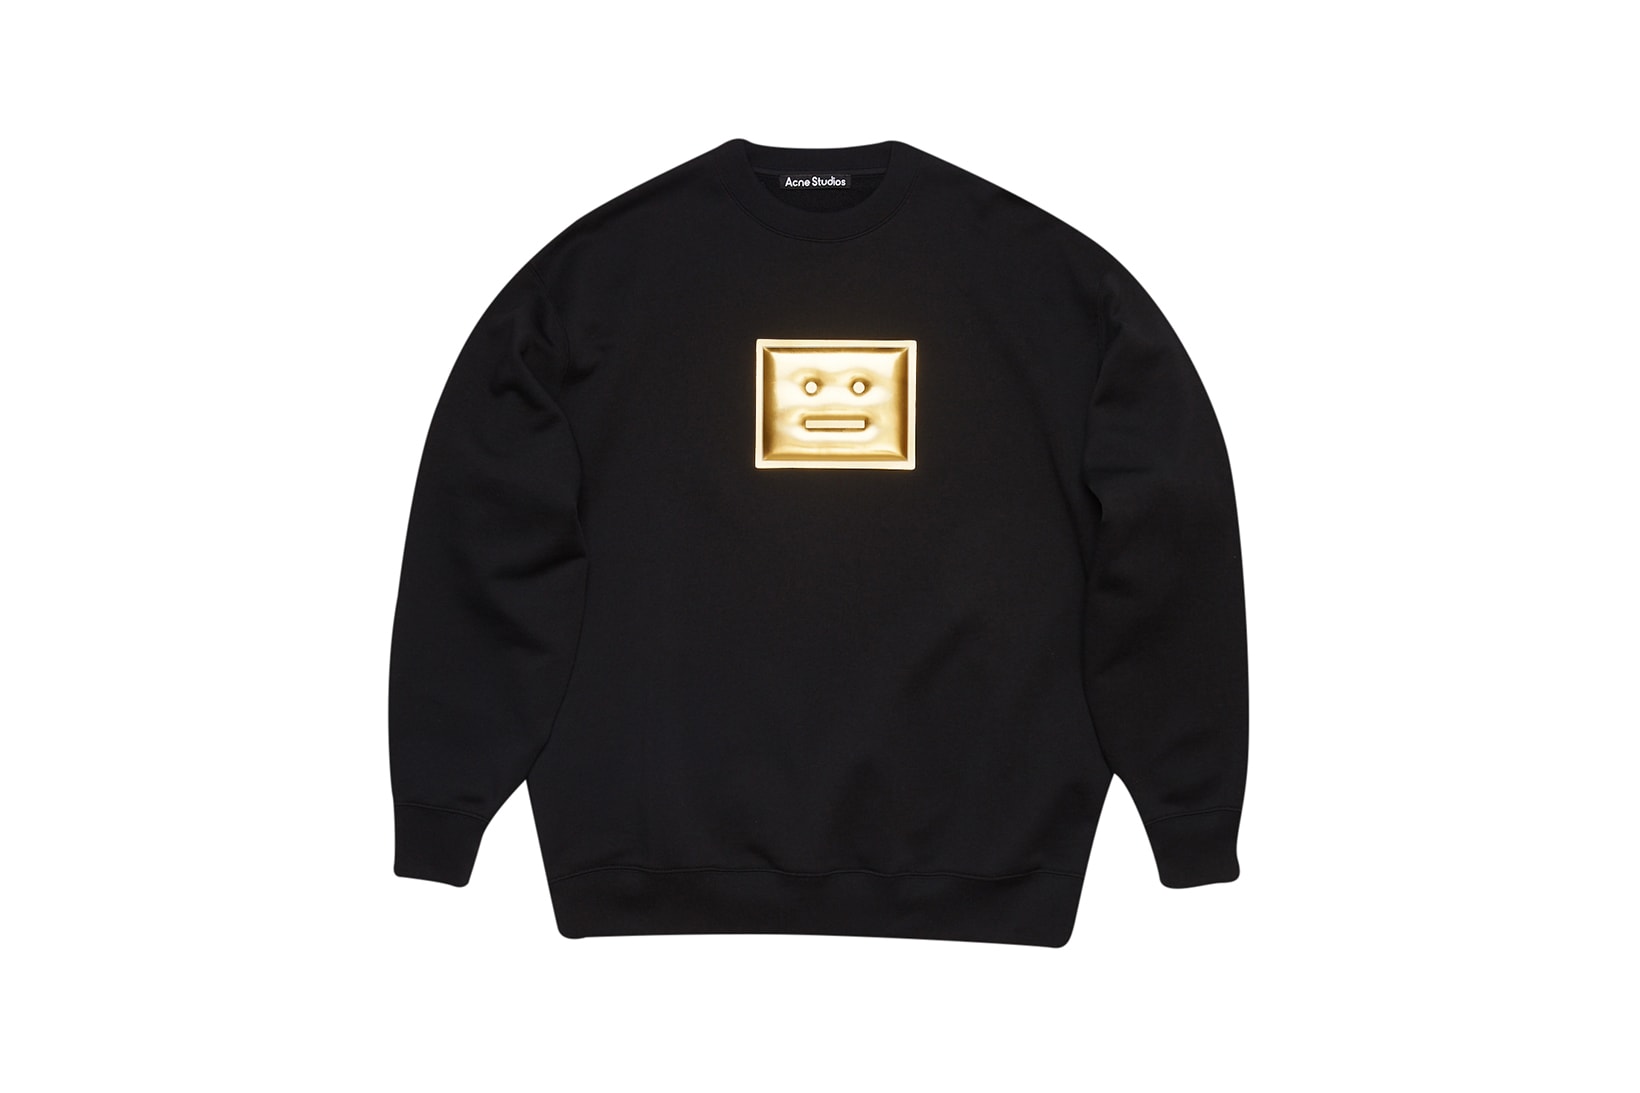 acne studios spring summer 2021 collection sweatshirt tee black pink gold fashion 